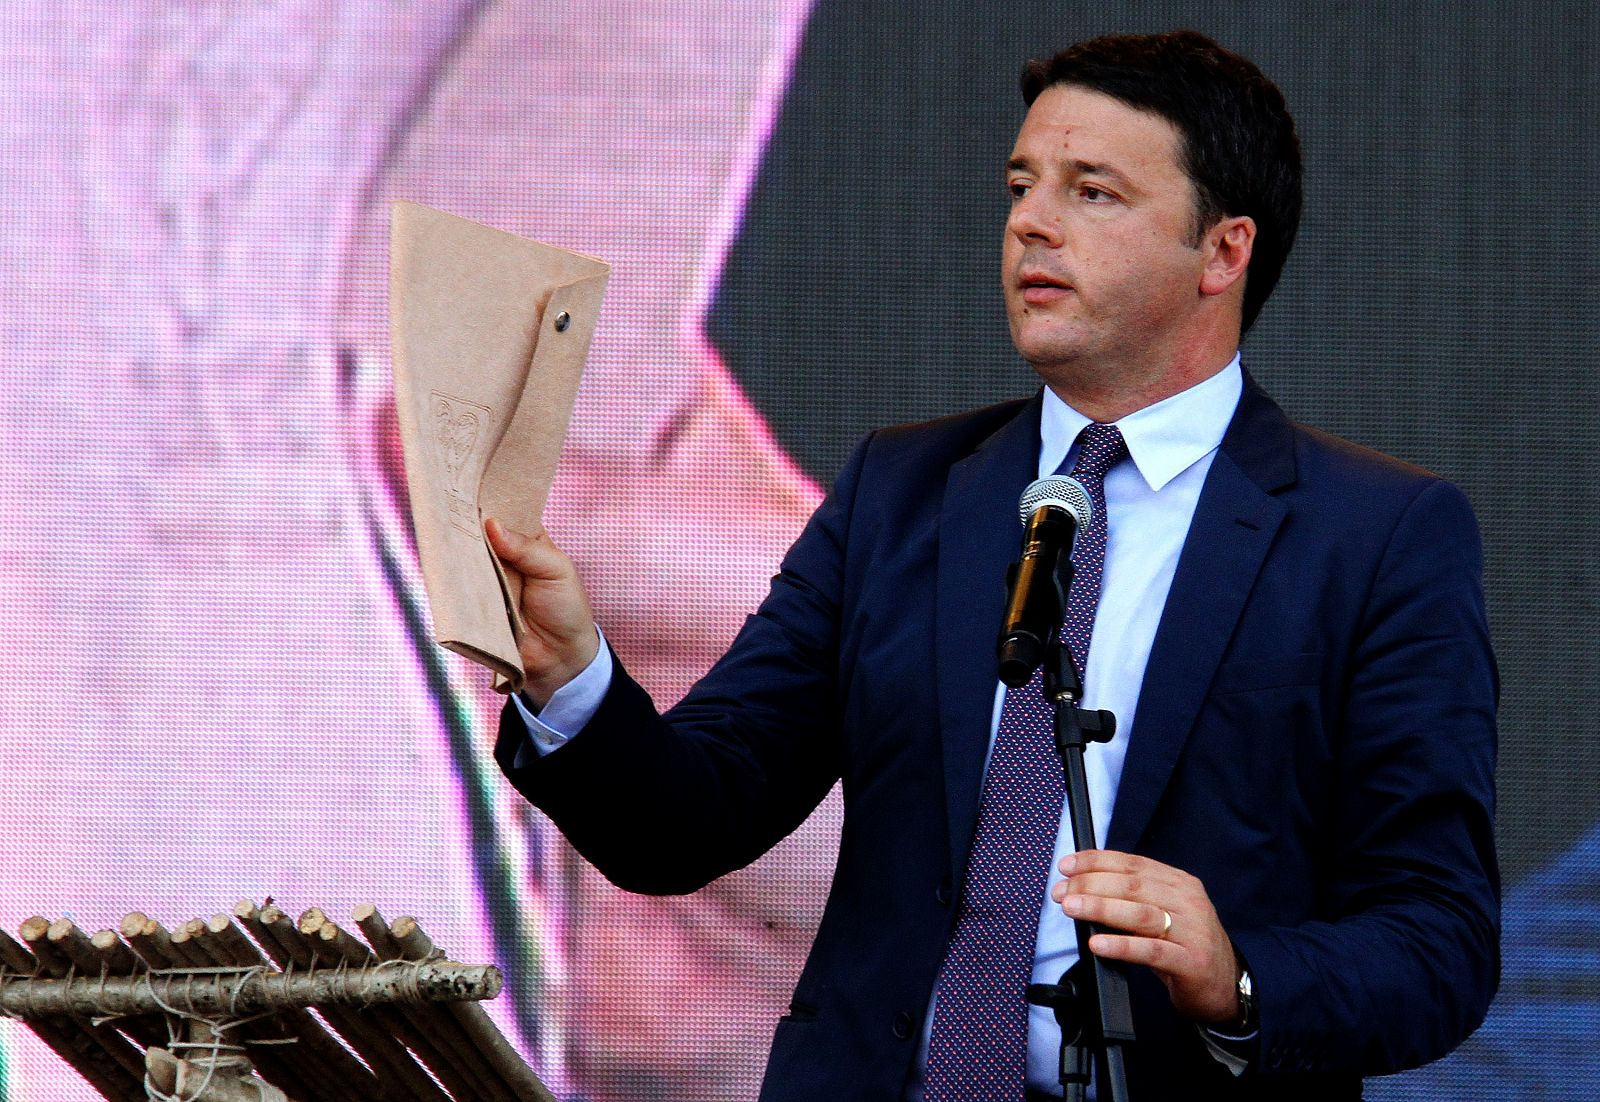 El primer ministro de Italia, Matteo Renzi